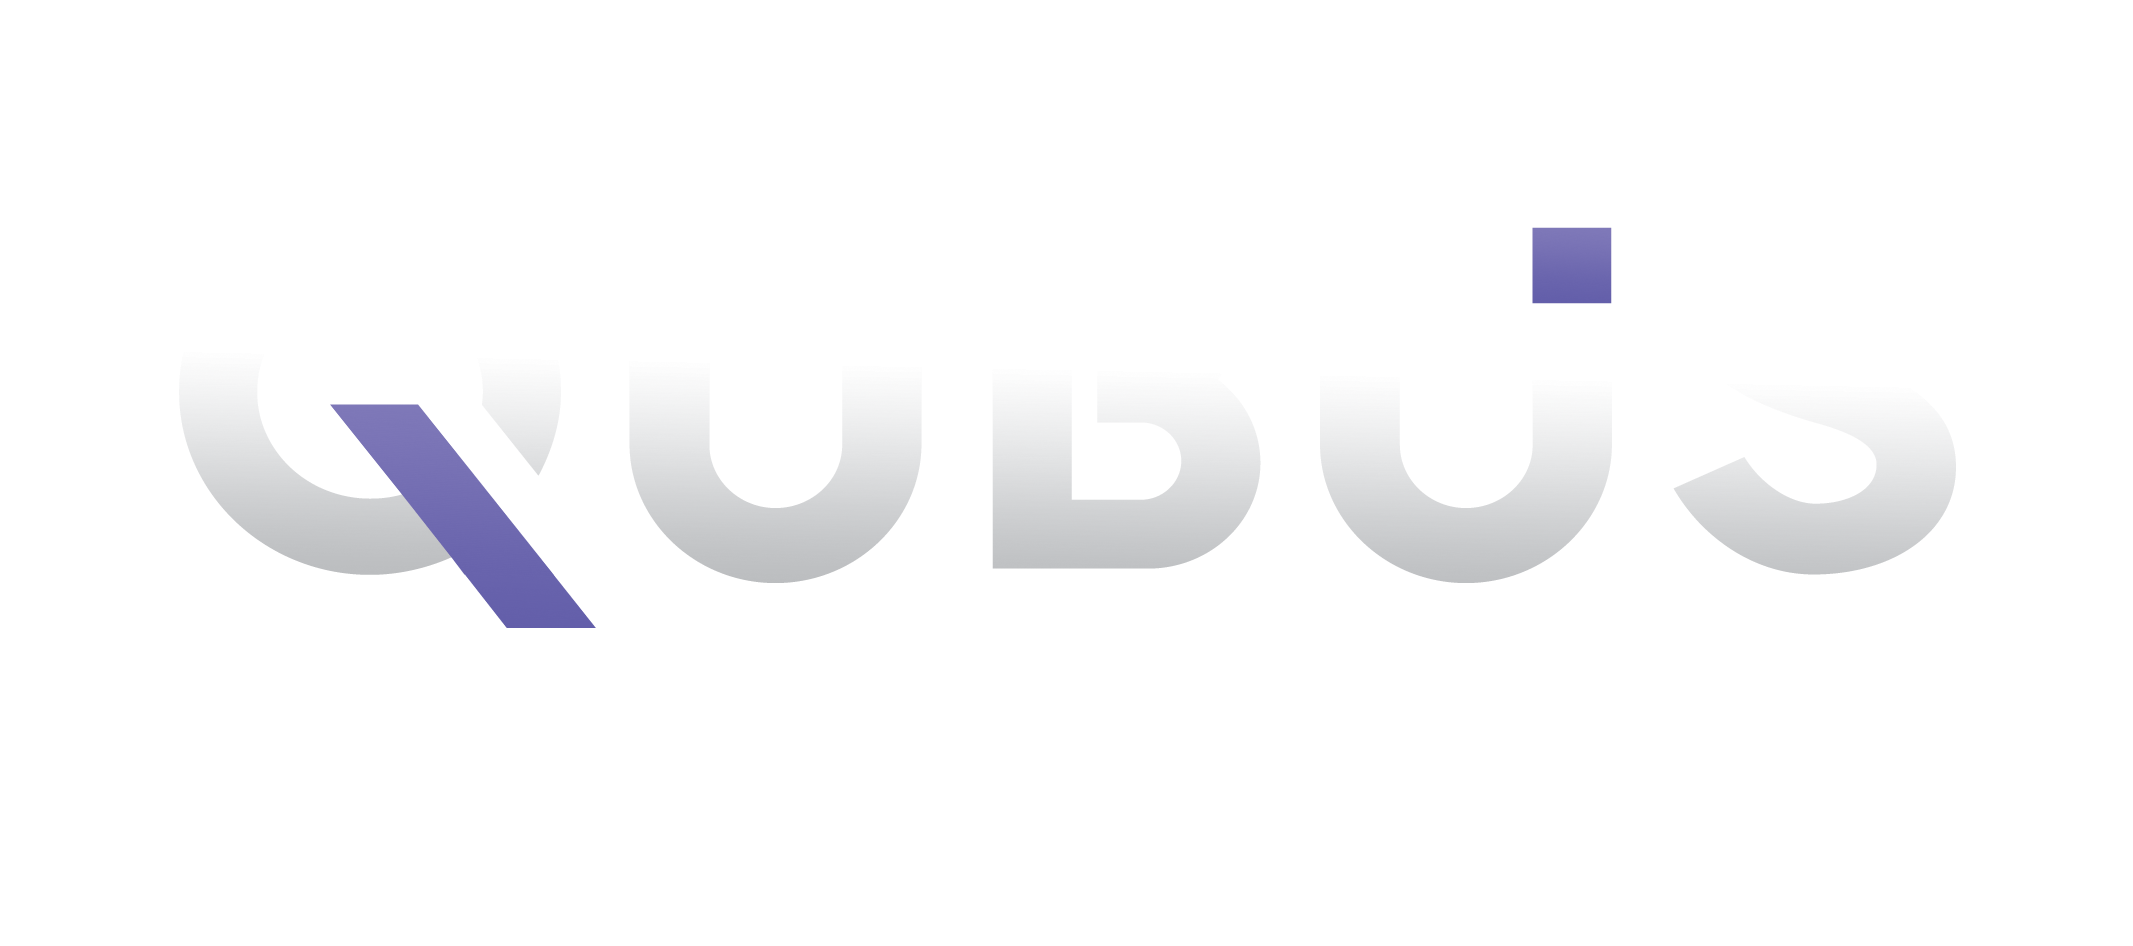 Qubus Group